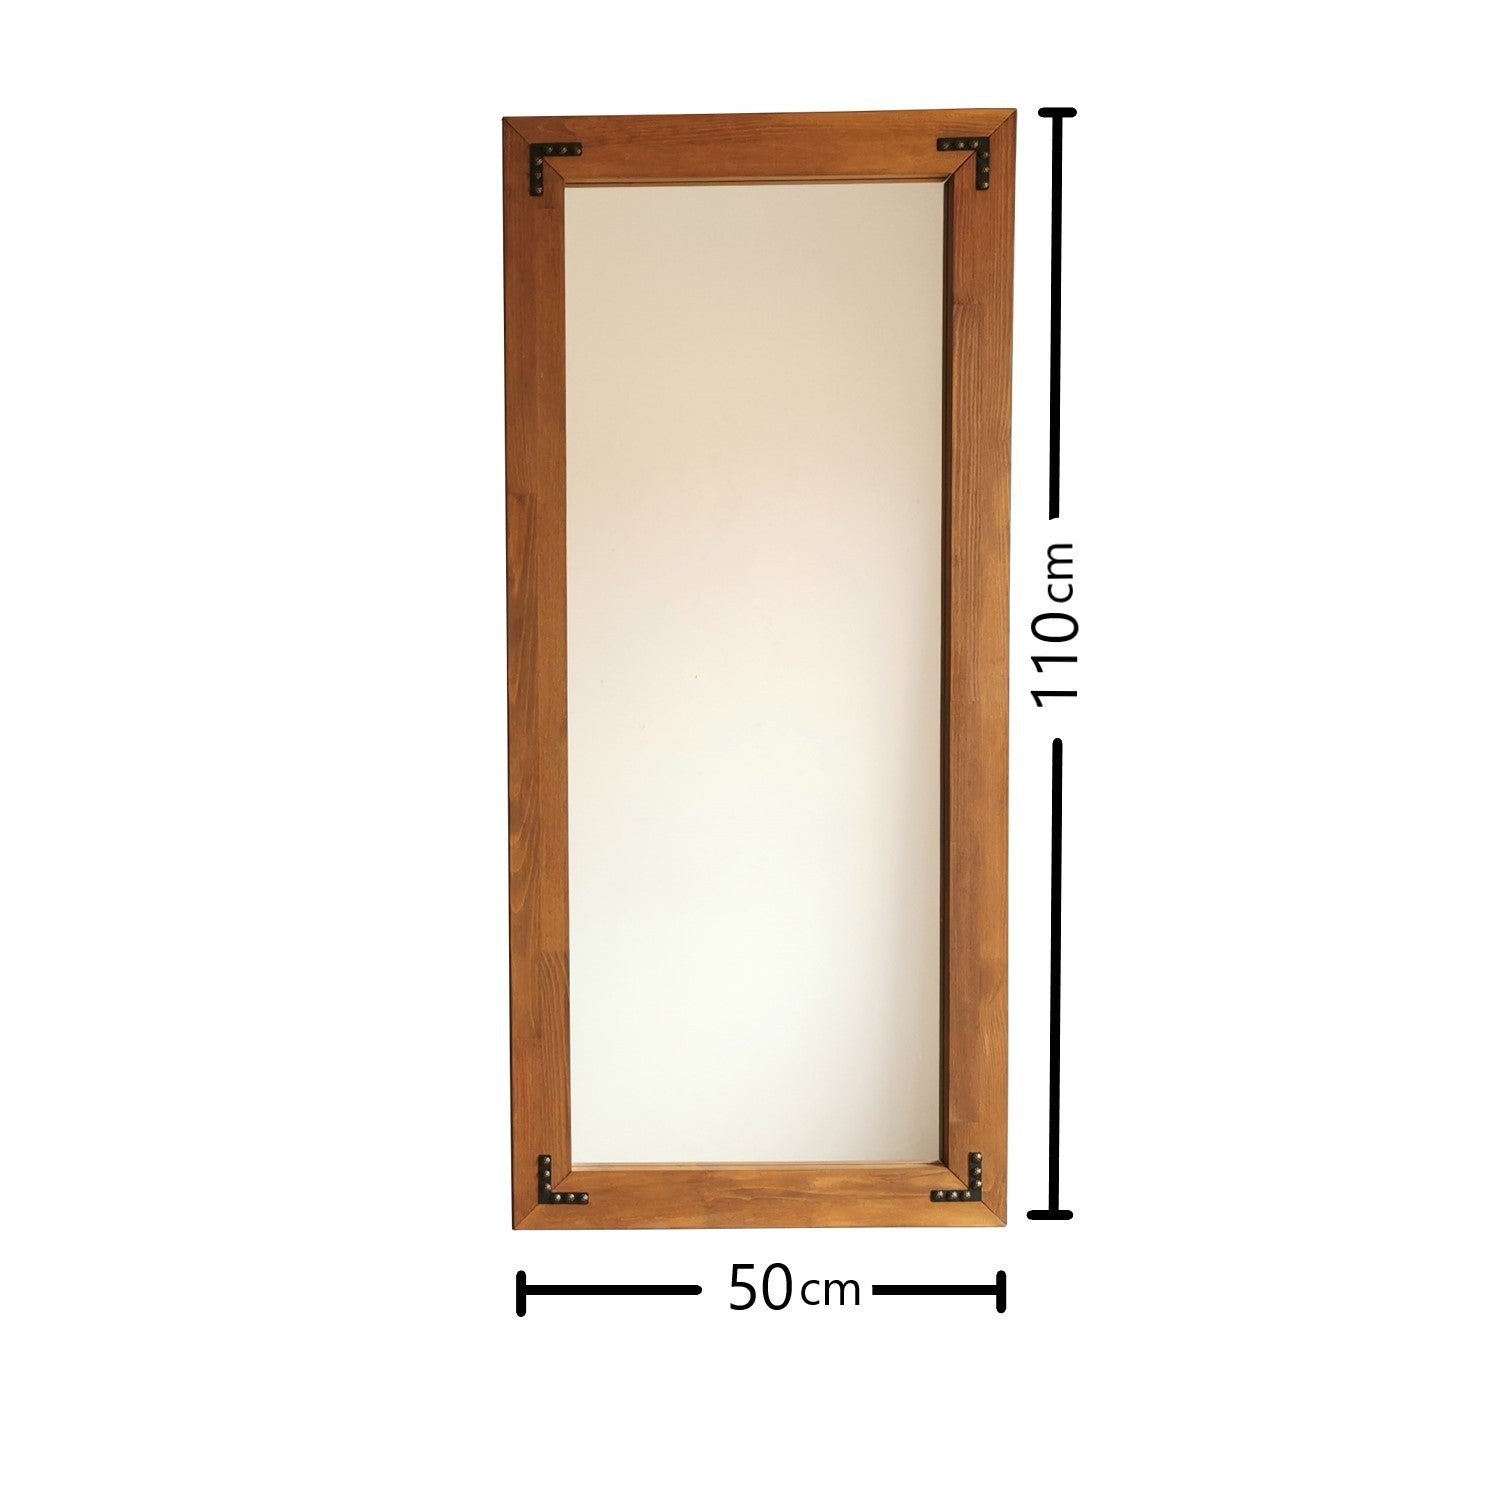 Oglinda perete 50110CV, nuc, lemn/sticla, 50x110 cm